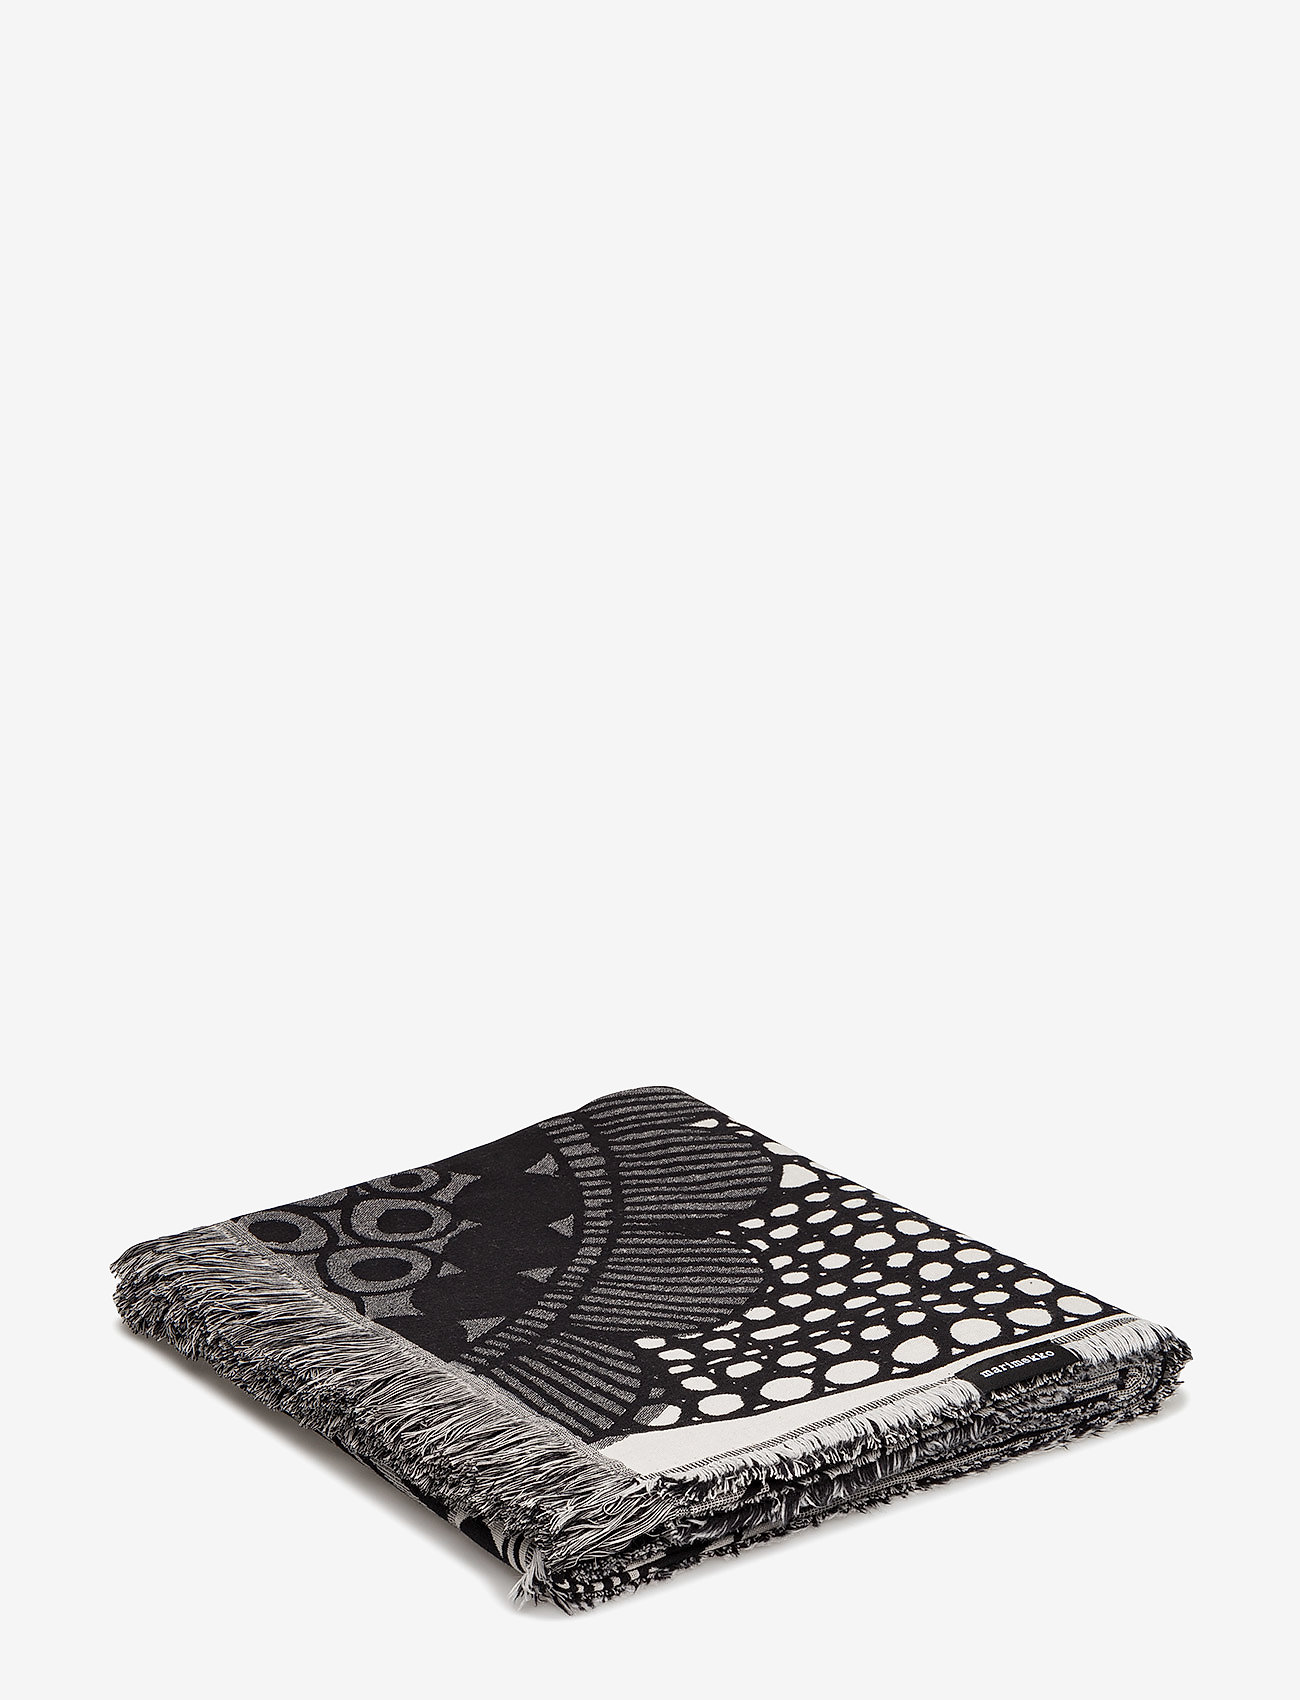 Marimekko Home - SIIRTOLAPUUTARHA BLANKET - blankets & throws - ecru, black - 0